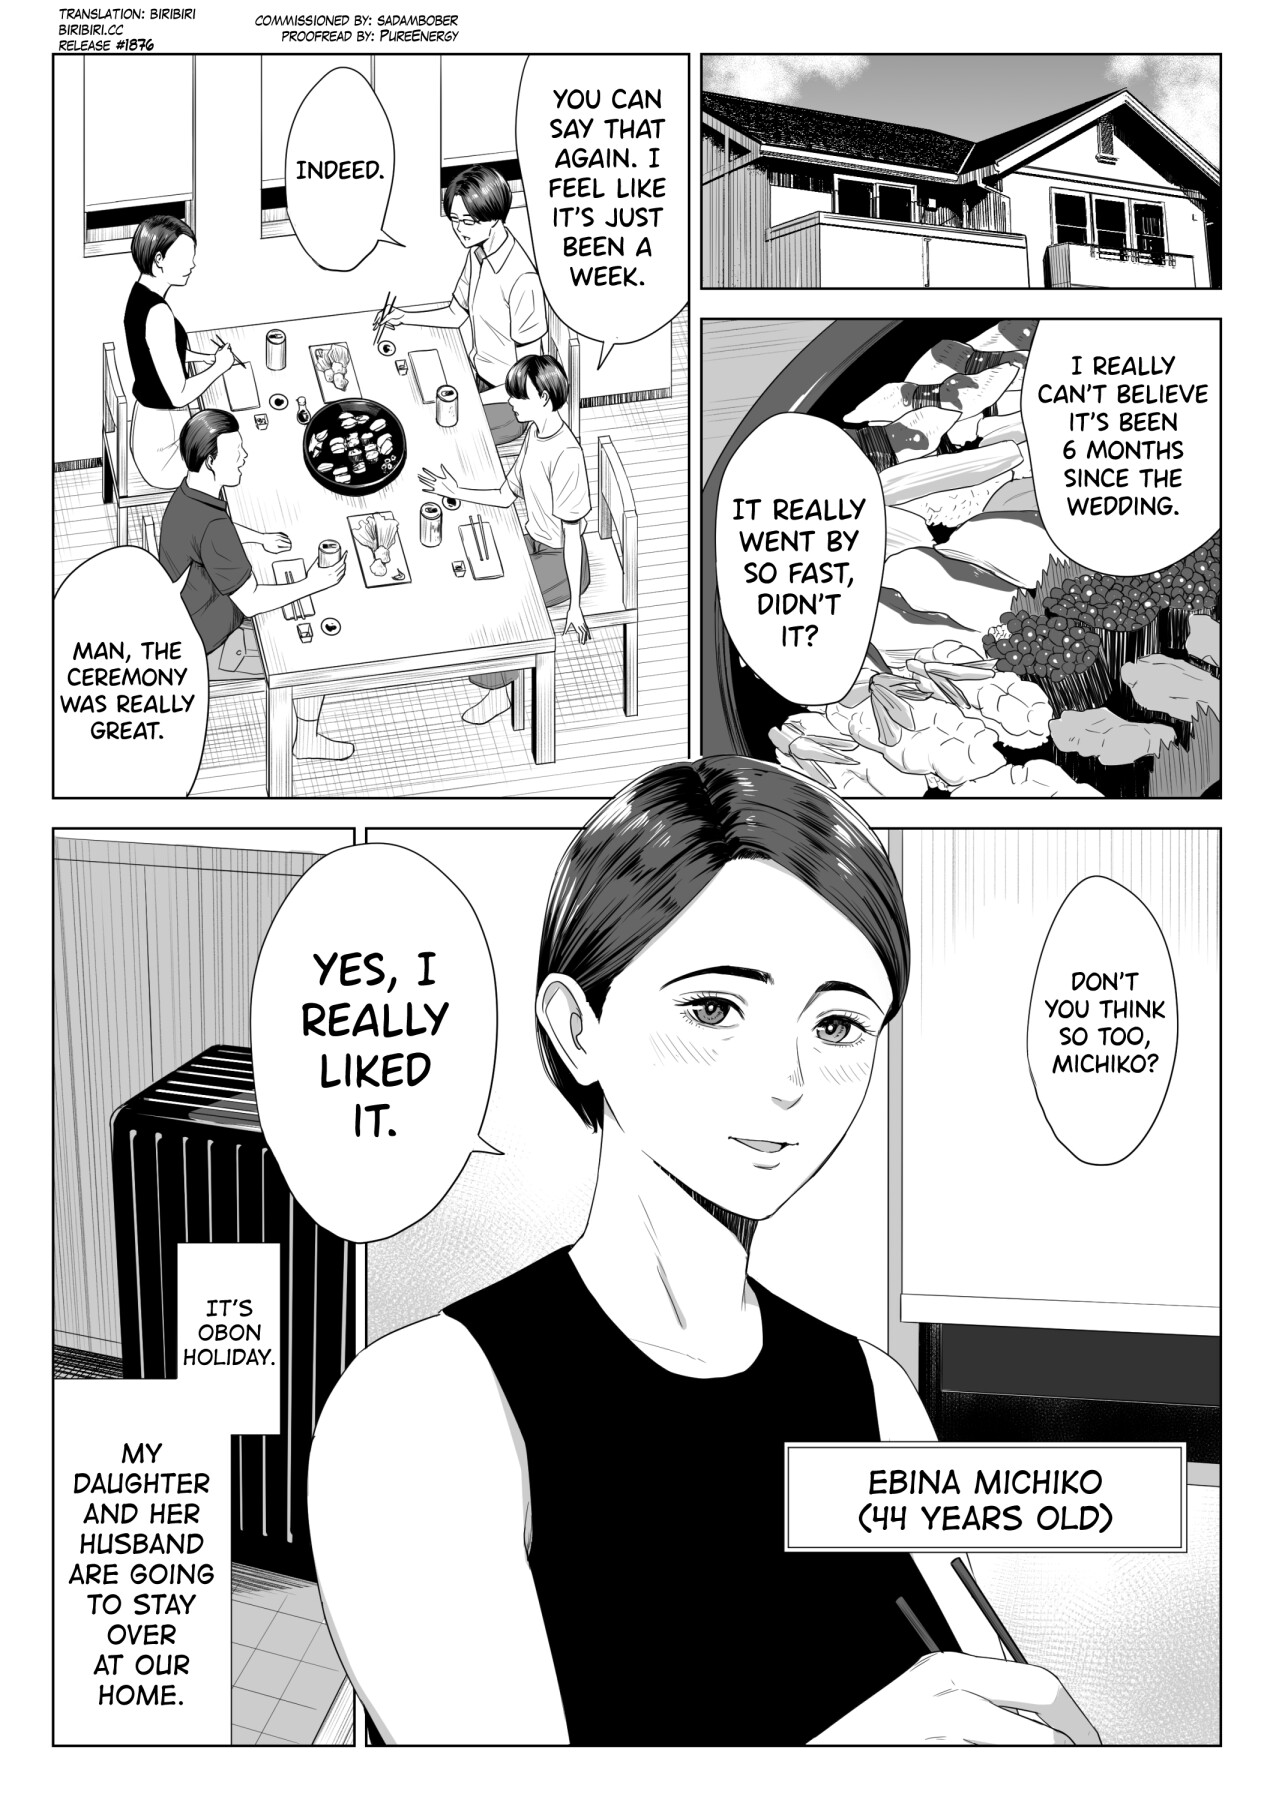 Hentai Manga Comic-Using my Mother-in-Law.-Read-2